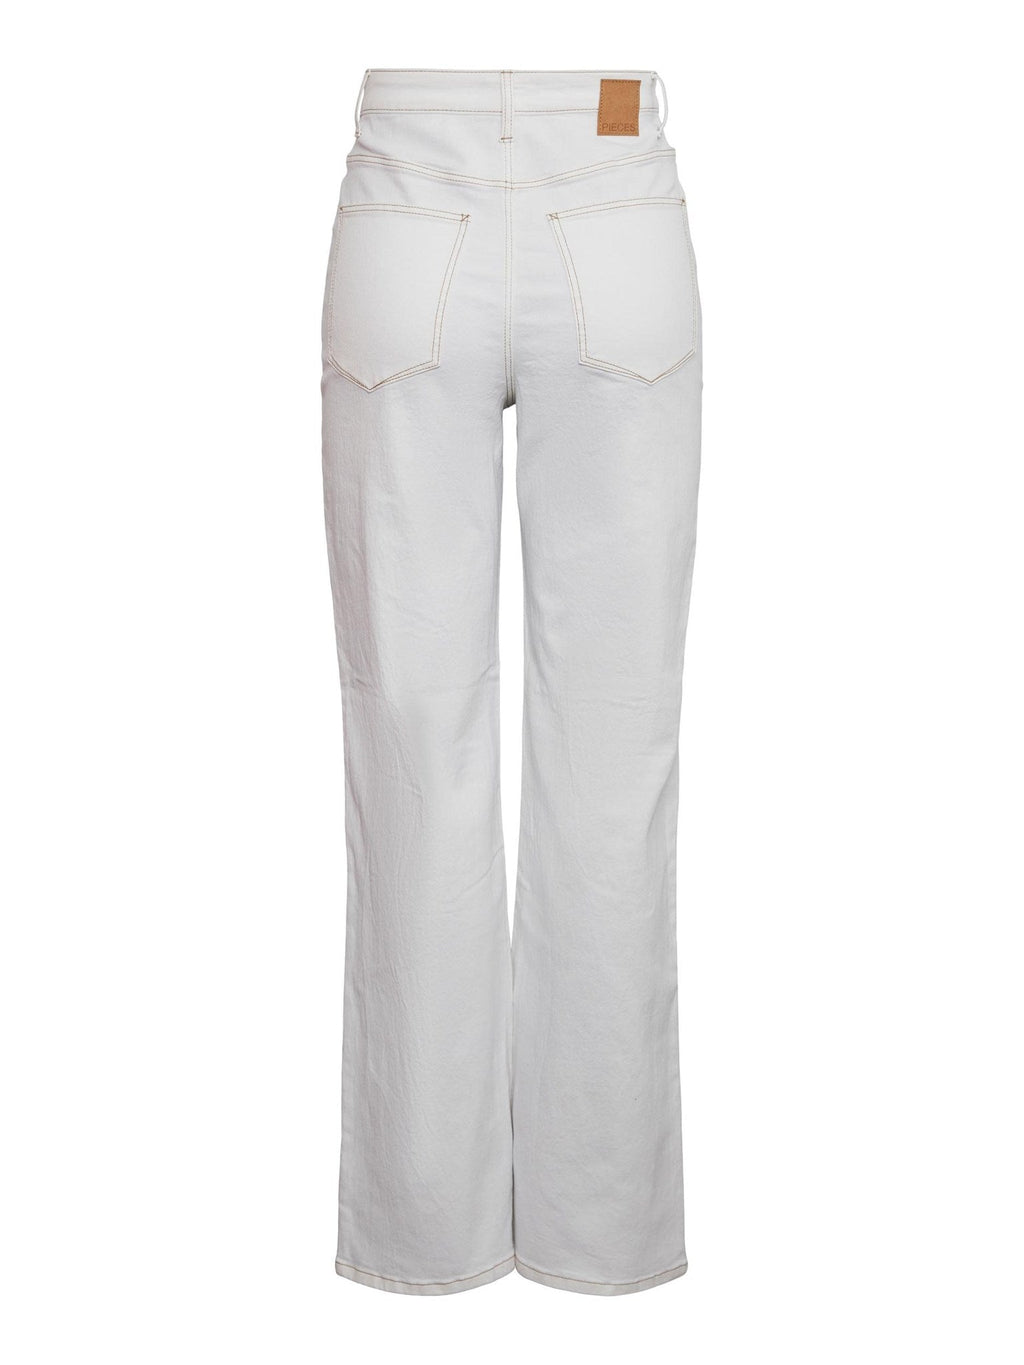 Noah Ultra High Taist Jeans - White